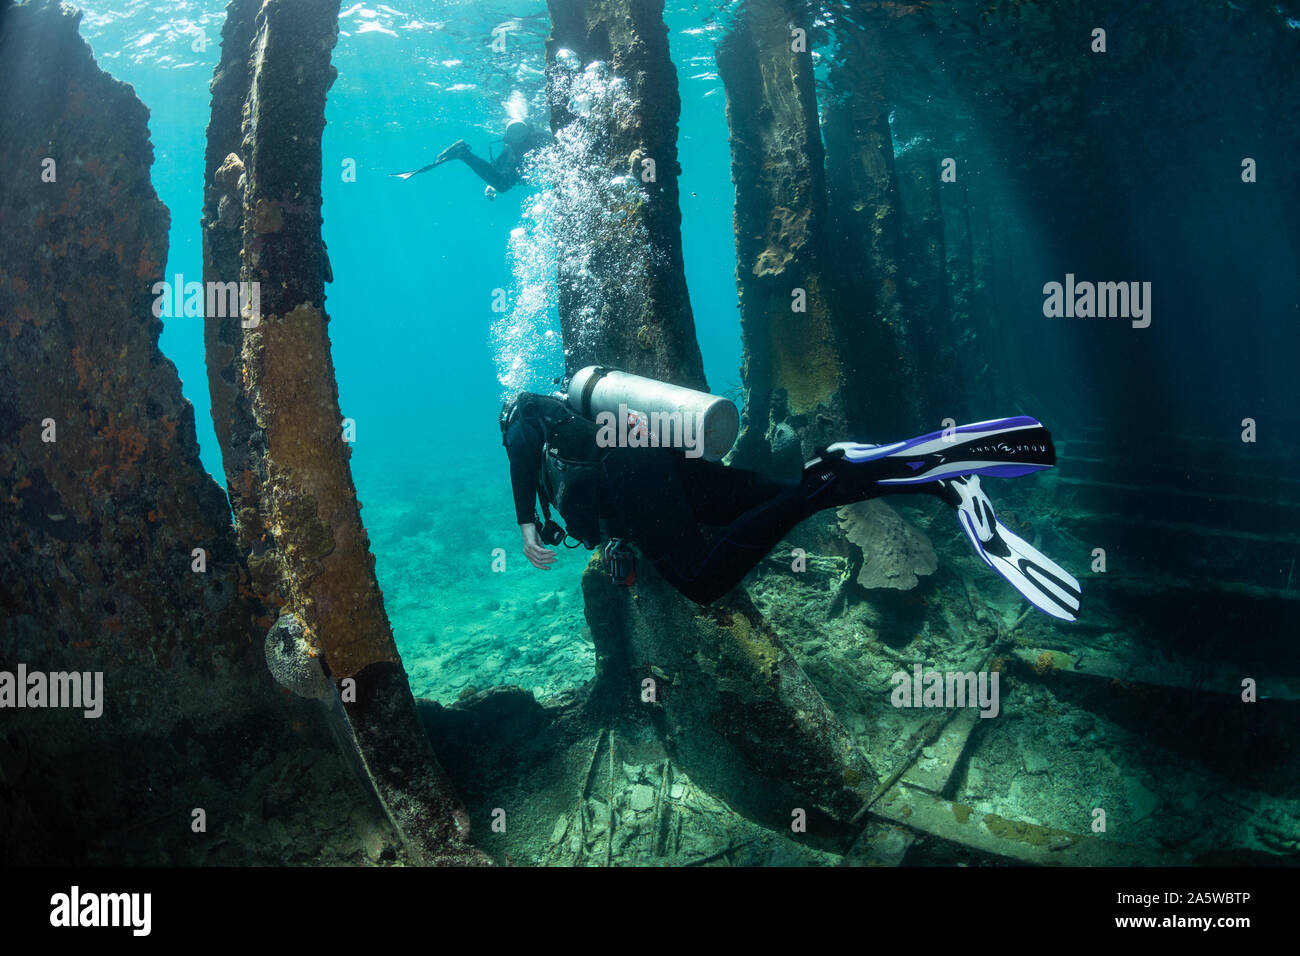 A scuba diver swims through ribs of the hull of the Sapona shipwreck in Bimini, Bahamas. Stock Photo